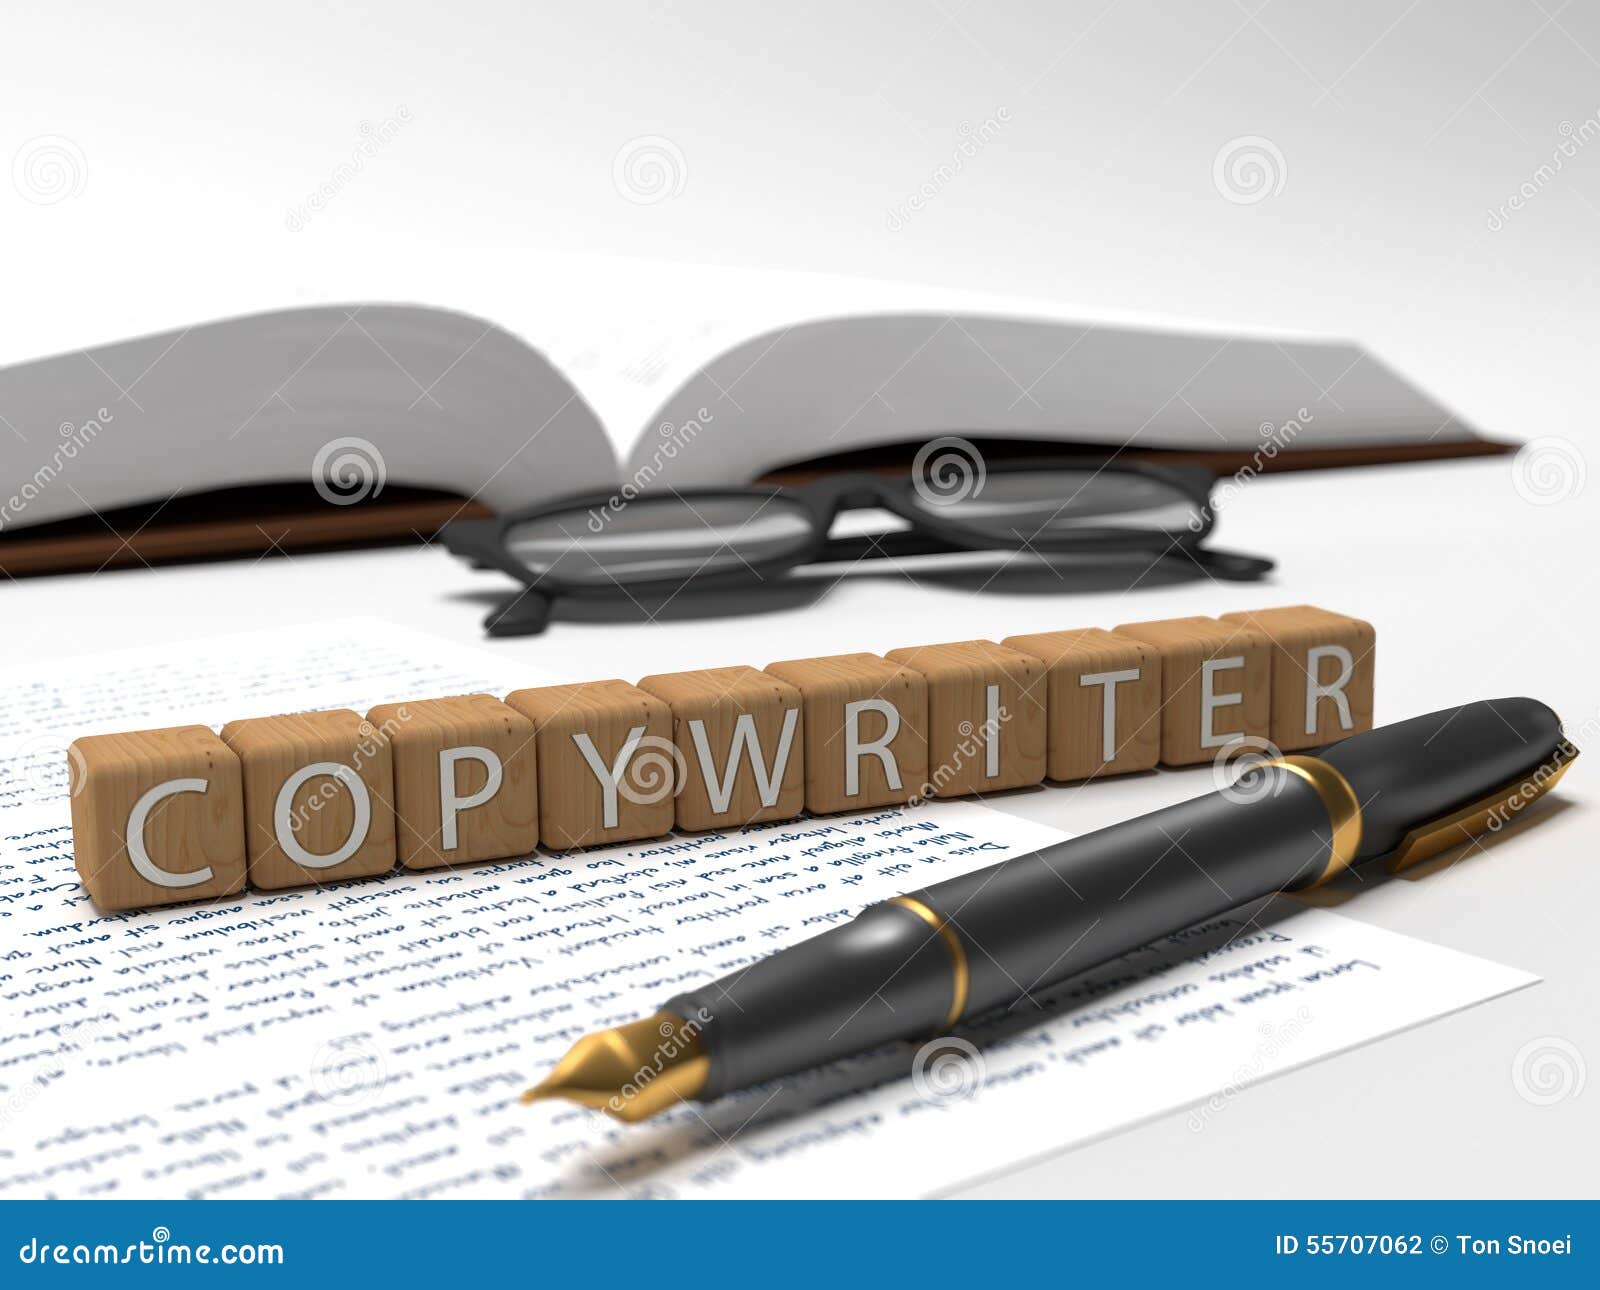 copywriter